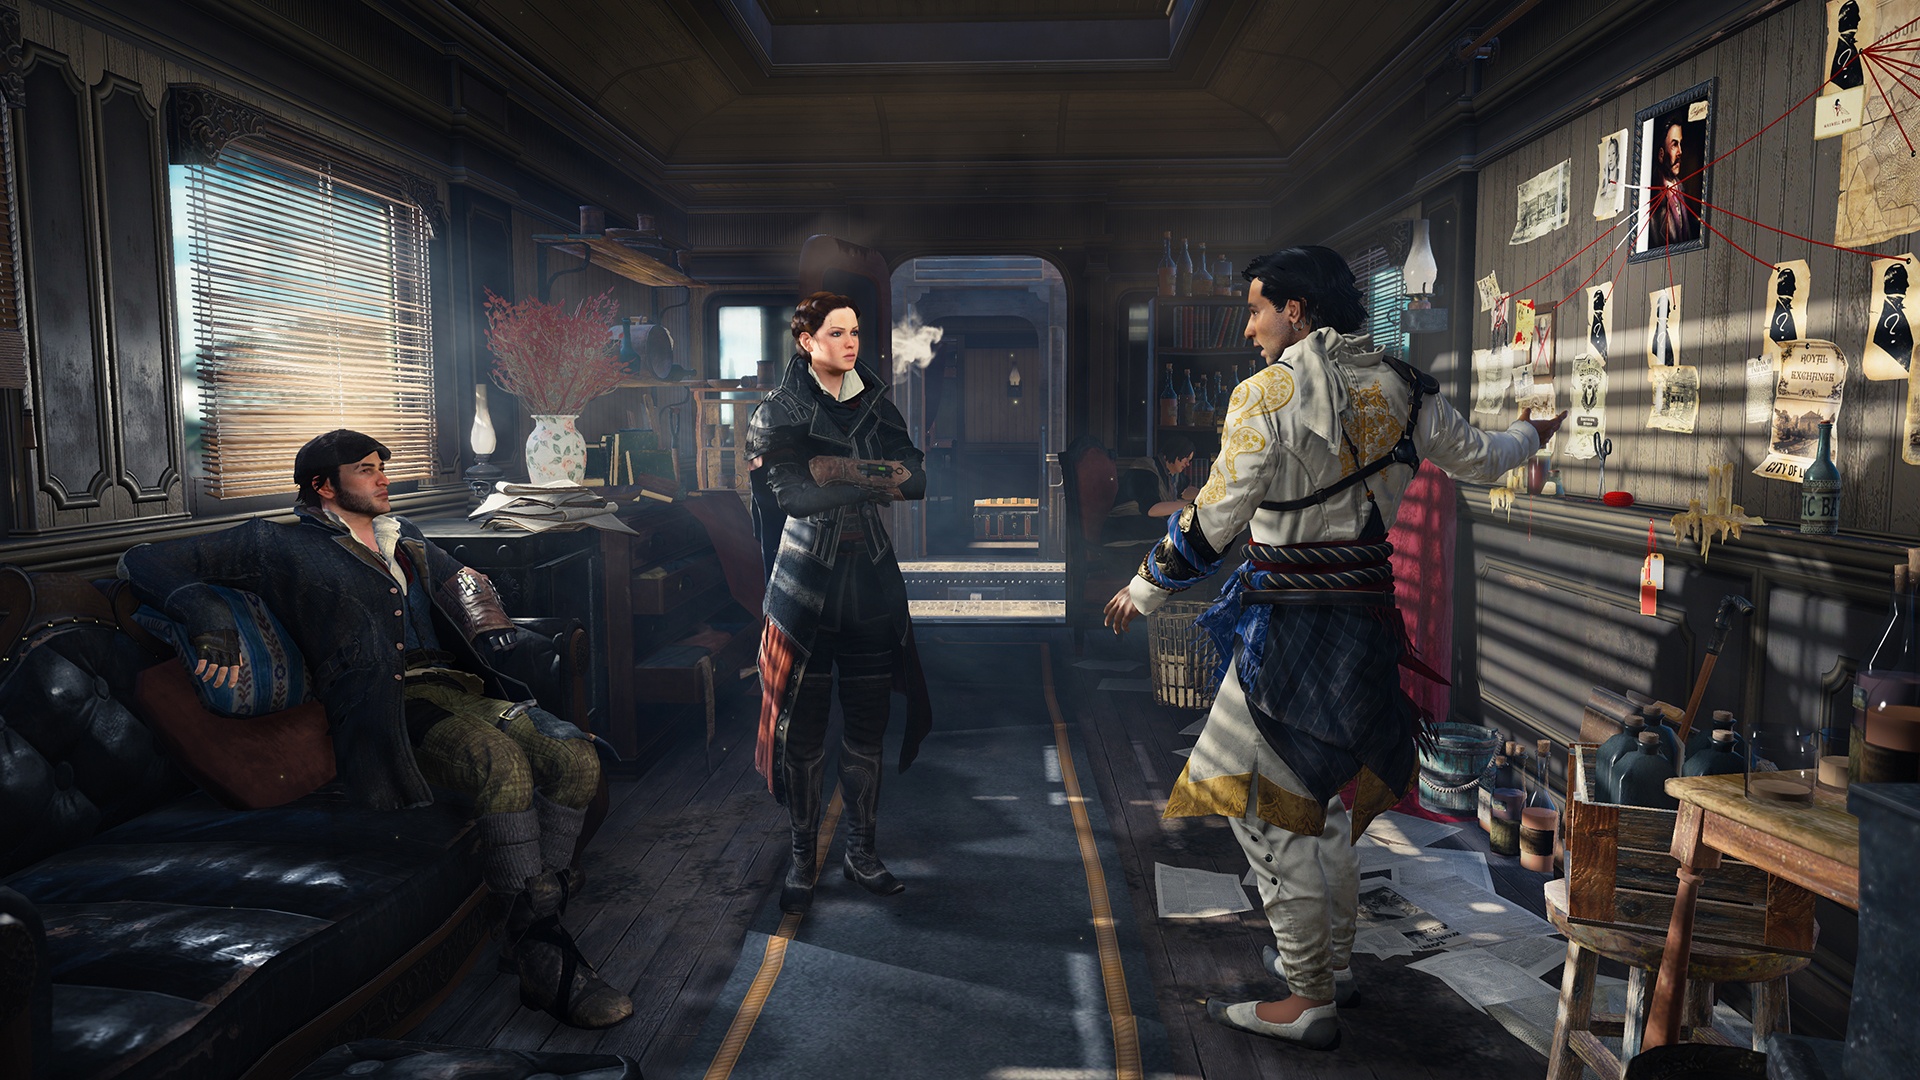 ТОП-10 игр серии Assassin's Creed согласно Metacritic на 2022 год